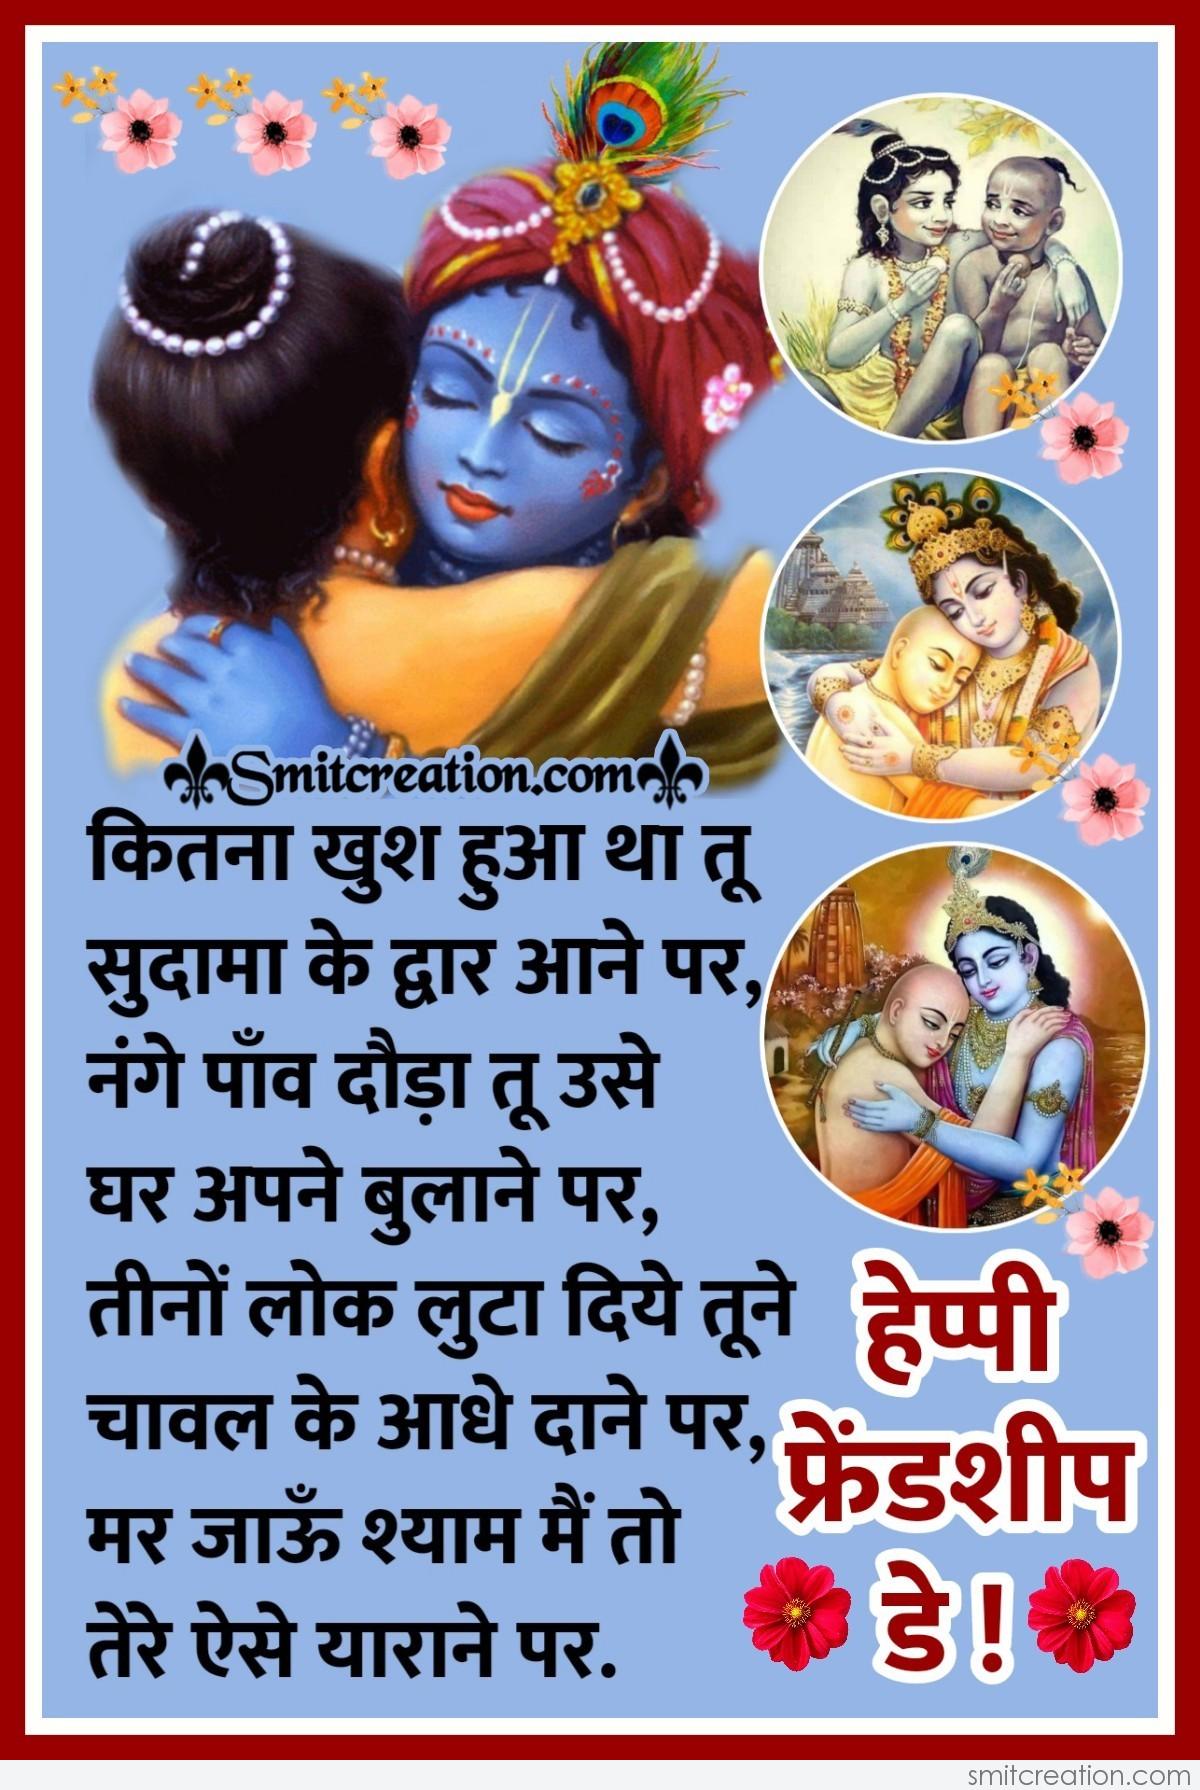 Krishna Sudama Friendship Day Hindi Quote - Smitcreation.com